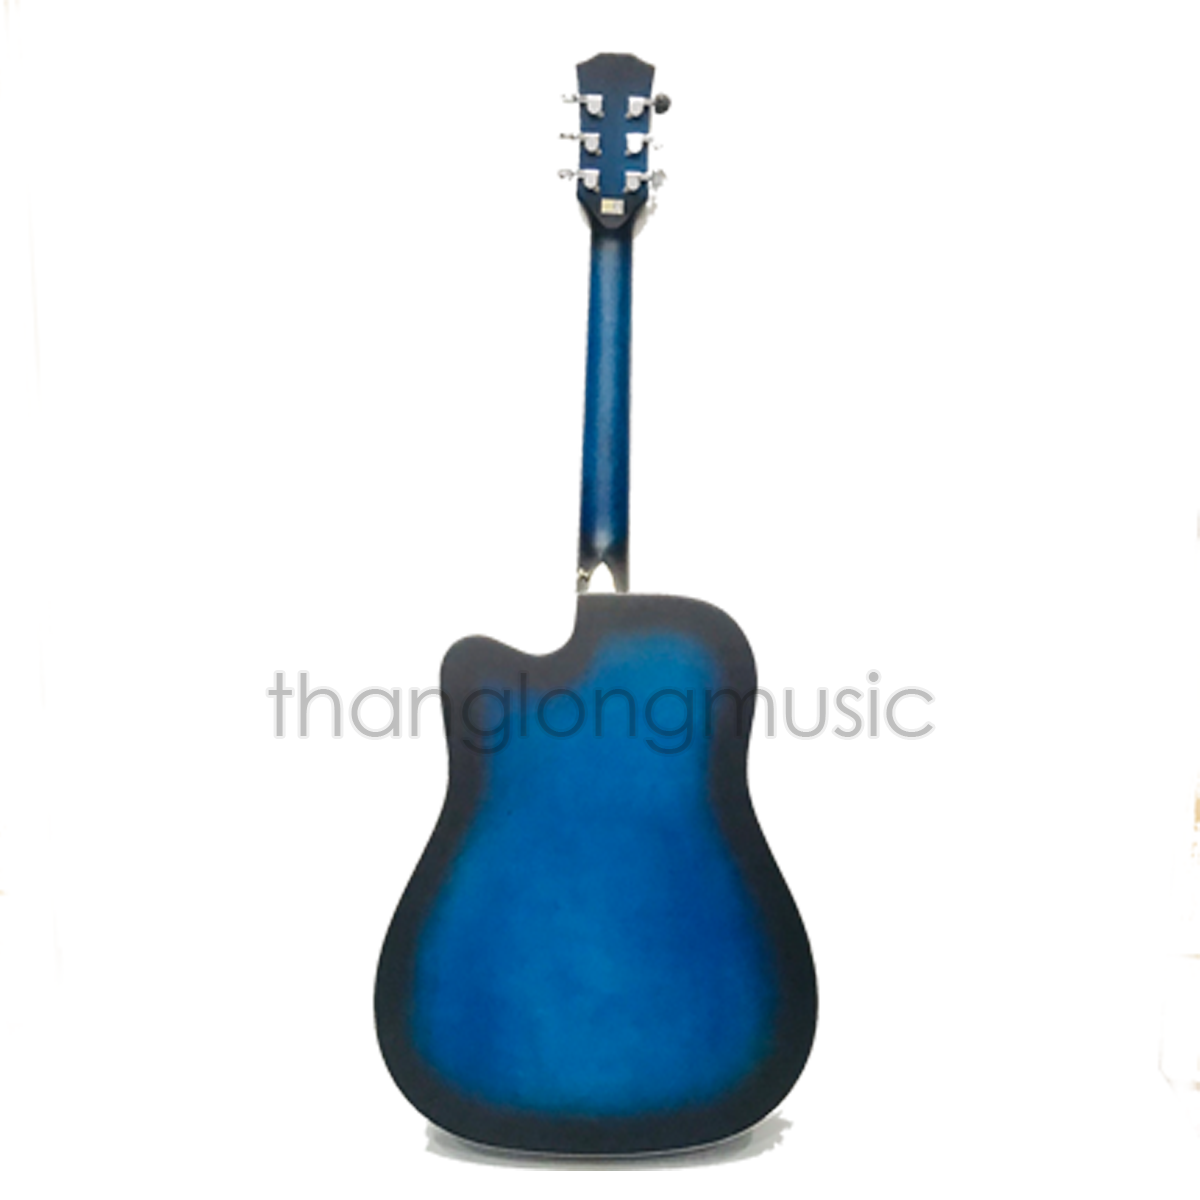 Đàn ghita Acoustic Rosen R135 (Acoustic guitar Rosen R-135)